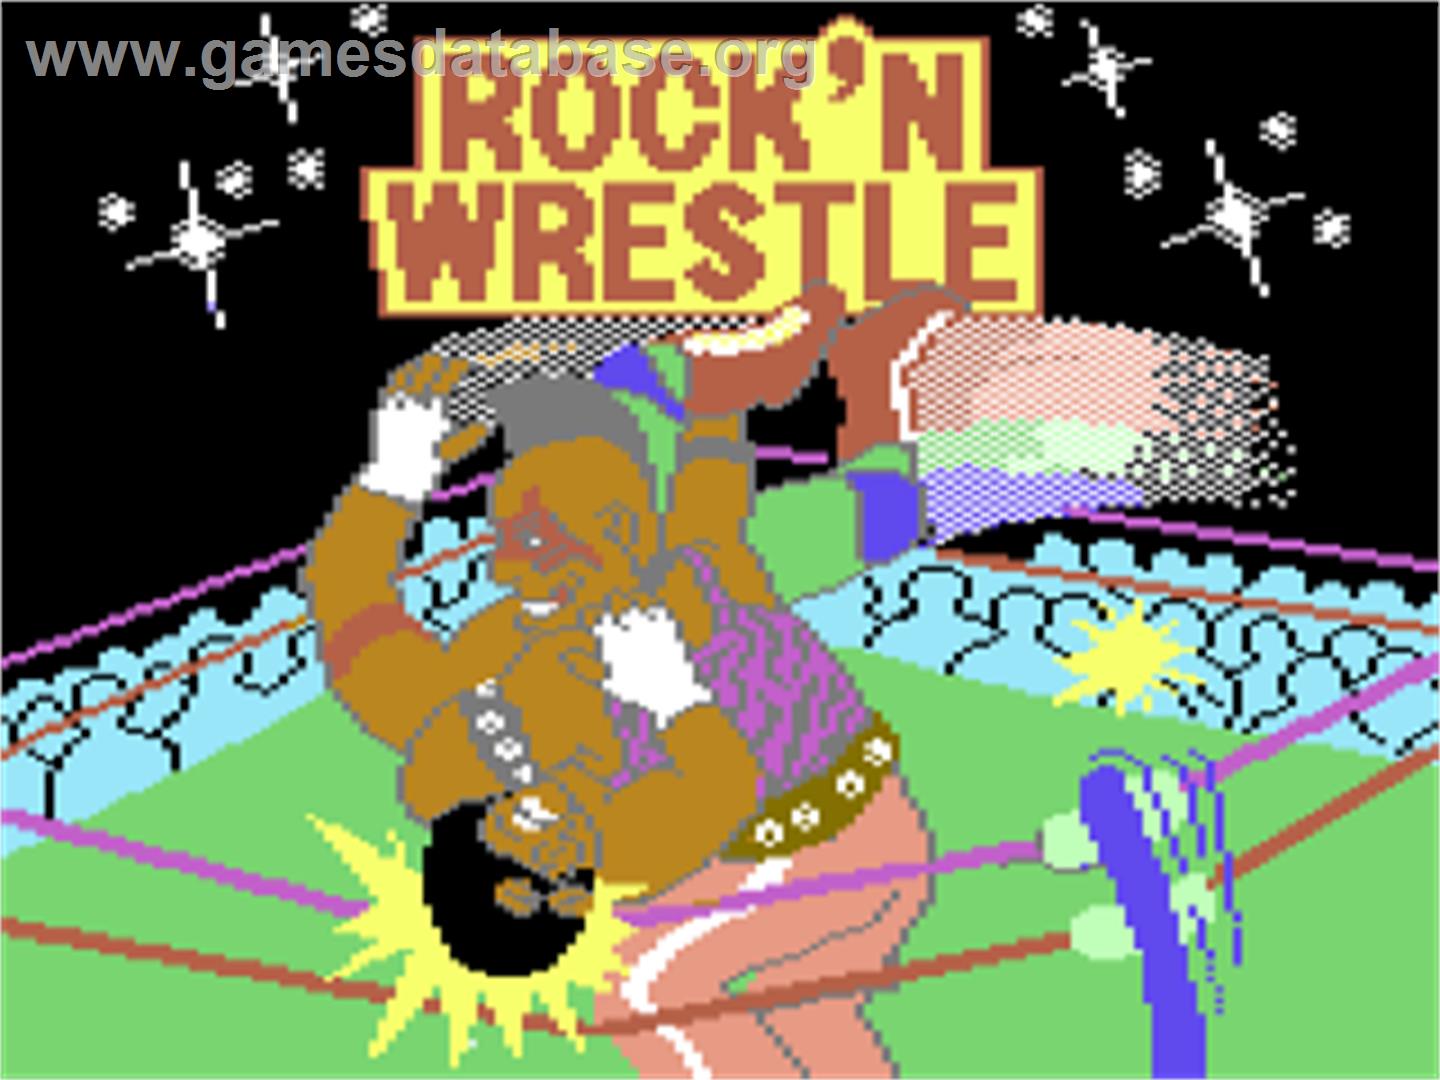 Rock'n Wrestle - Commodore 64 - Artwork - Title Screen